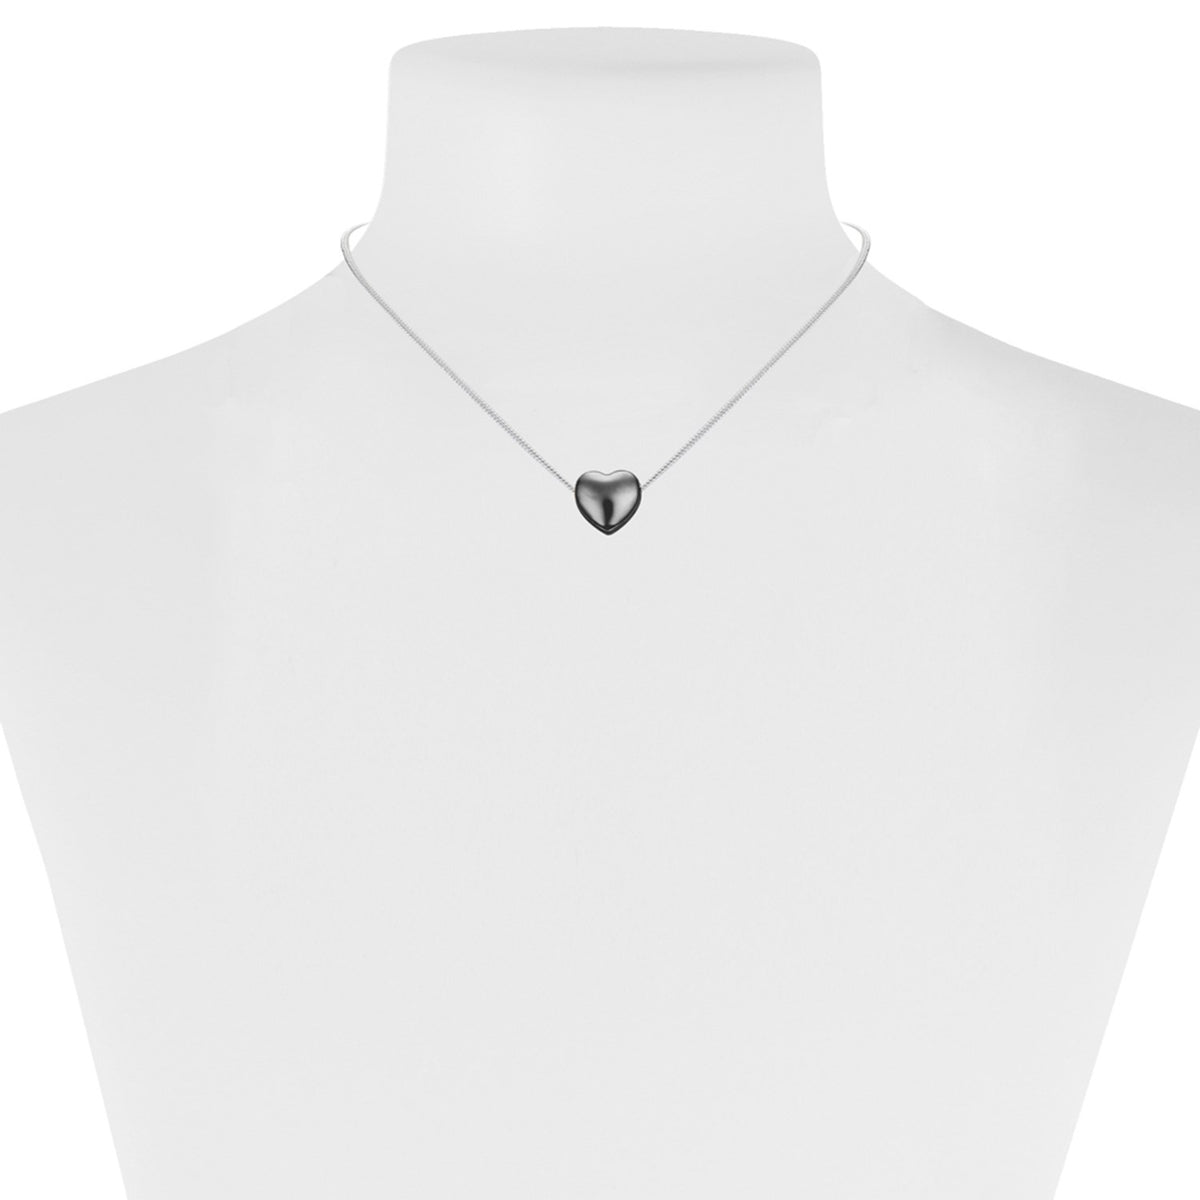 Hemitite little heart pendant necklace